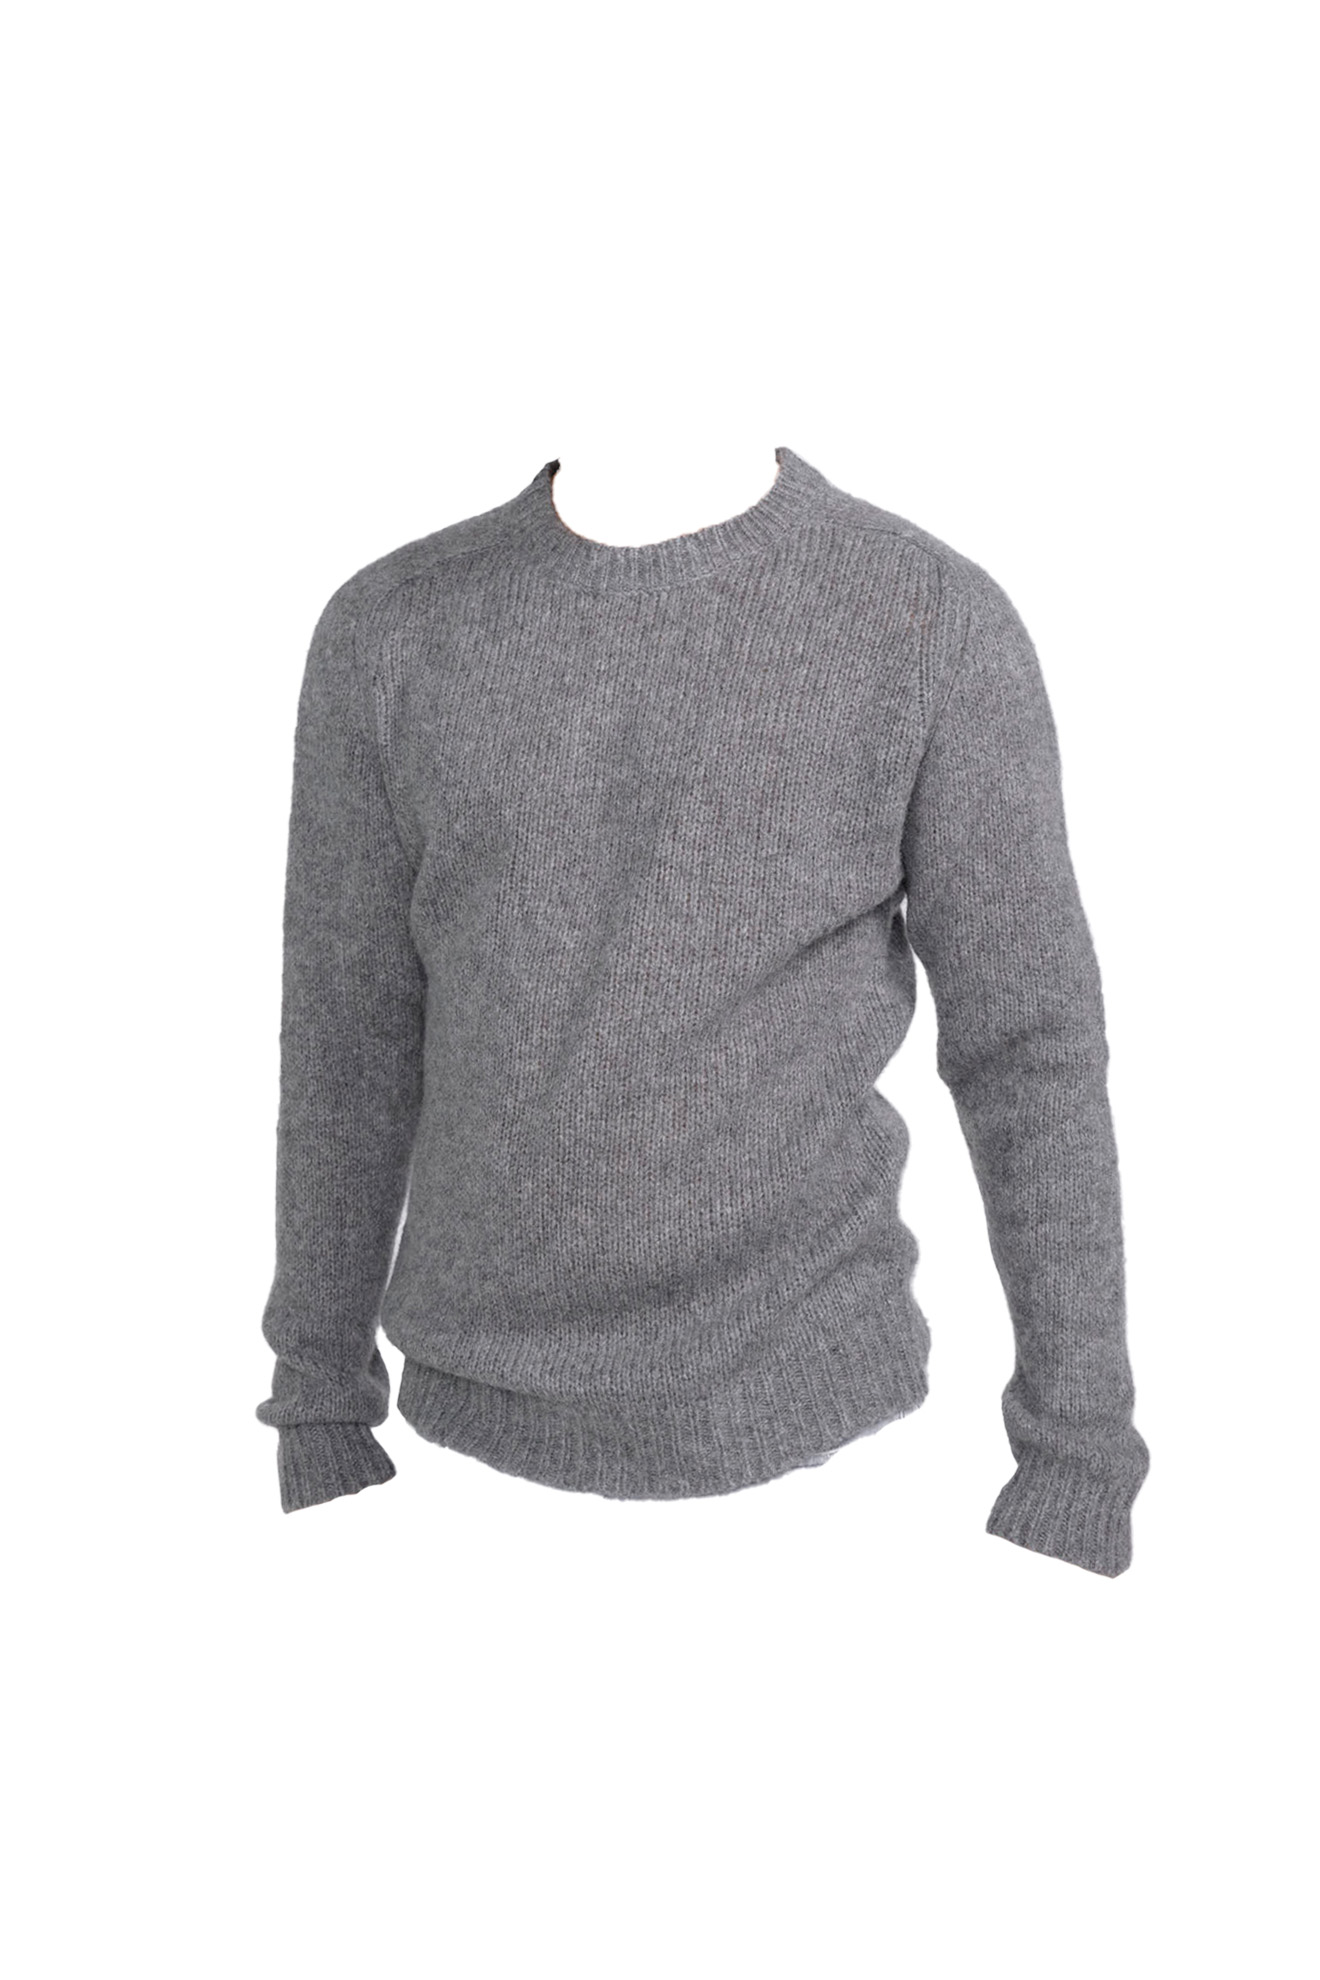 Stephan Boya Leo Nimbus Raglan Sweater grau XL